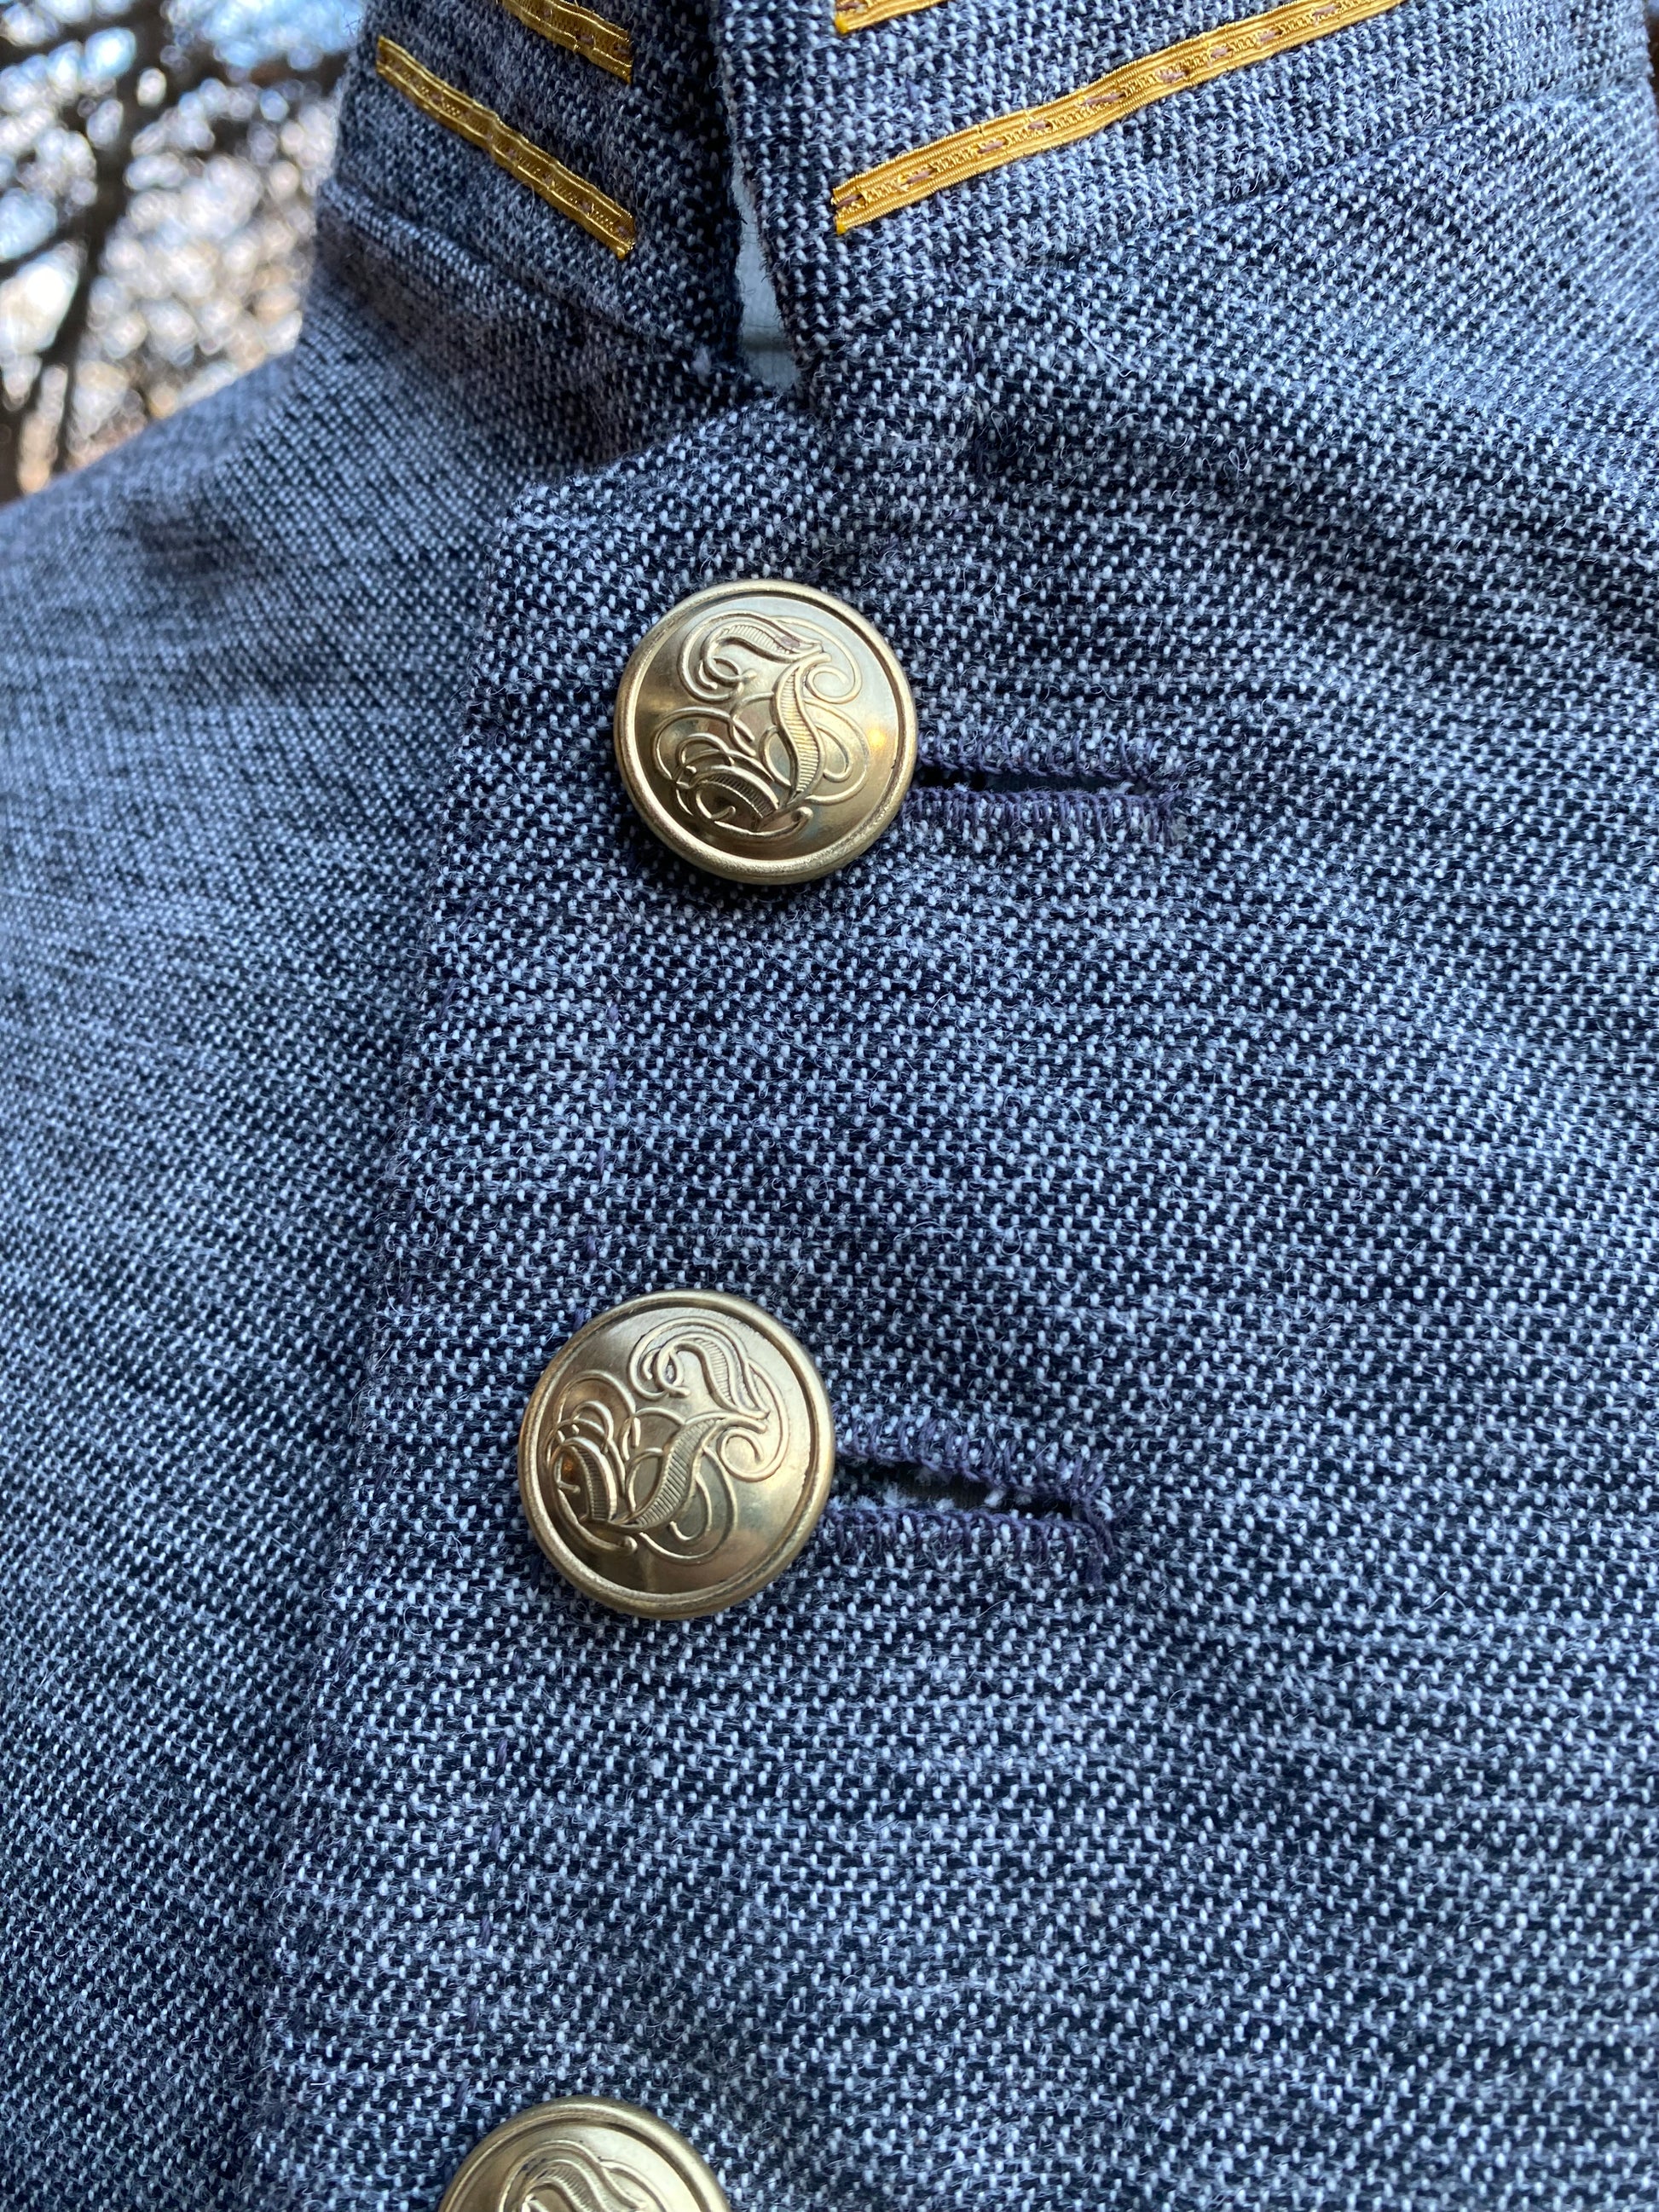 Confederate Officers Jacket – Beauregard's Tailor